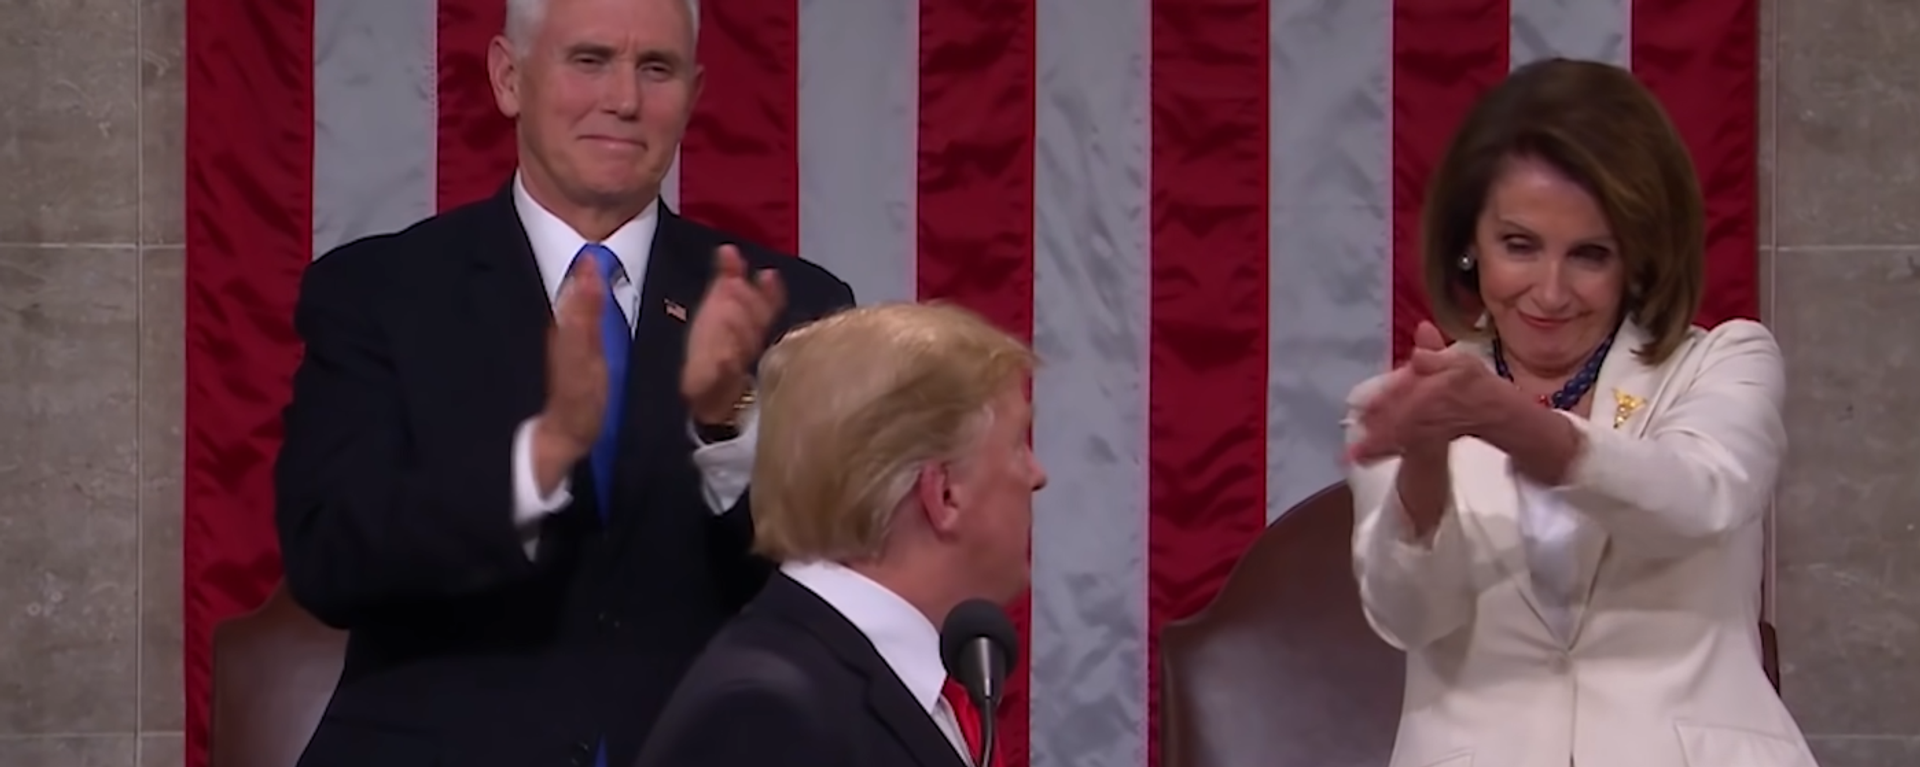 Nancy Pelosi claps for Donald Trump at State of the Union address. - Sputnik International, 1920, 06.08.2022